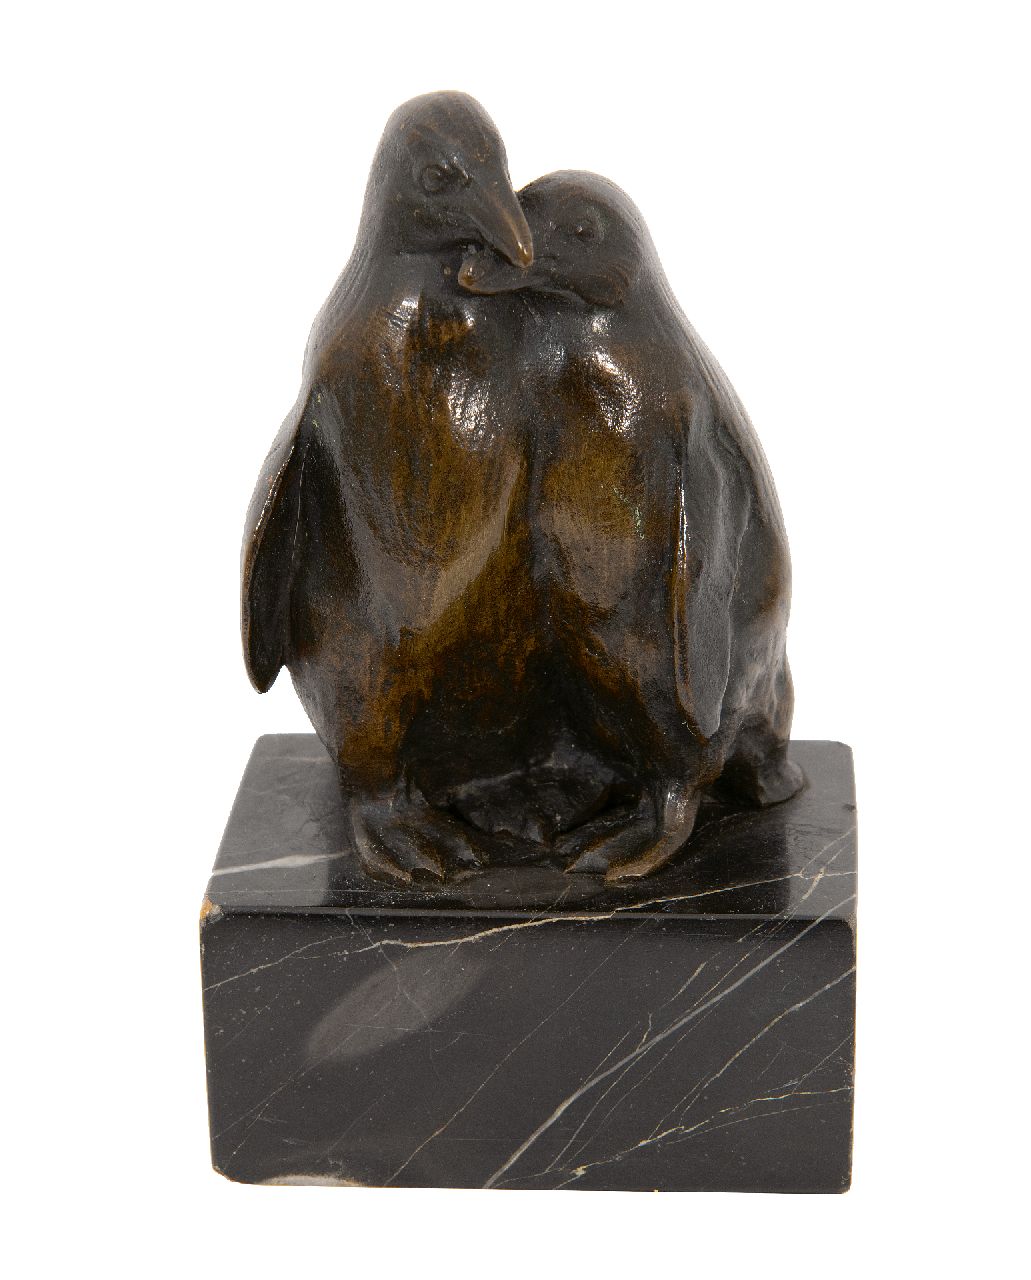 Pallenberg J.F.  | Josef Franz Pallenberg | Sculptures and objects offered for sale | Cuddling penguins, bronze 10.0 x 6.5 cm